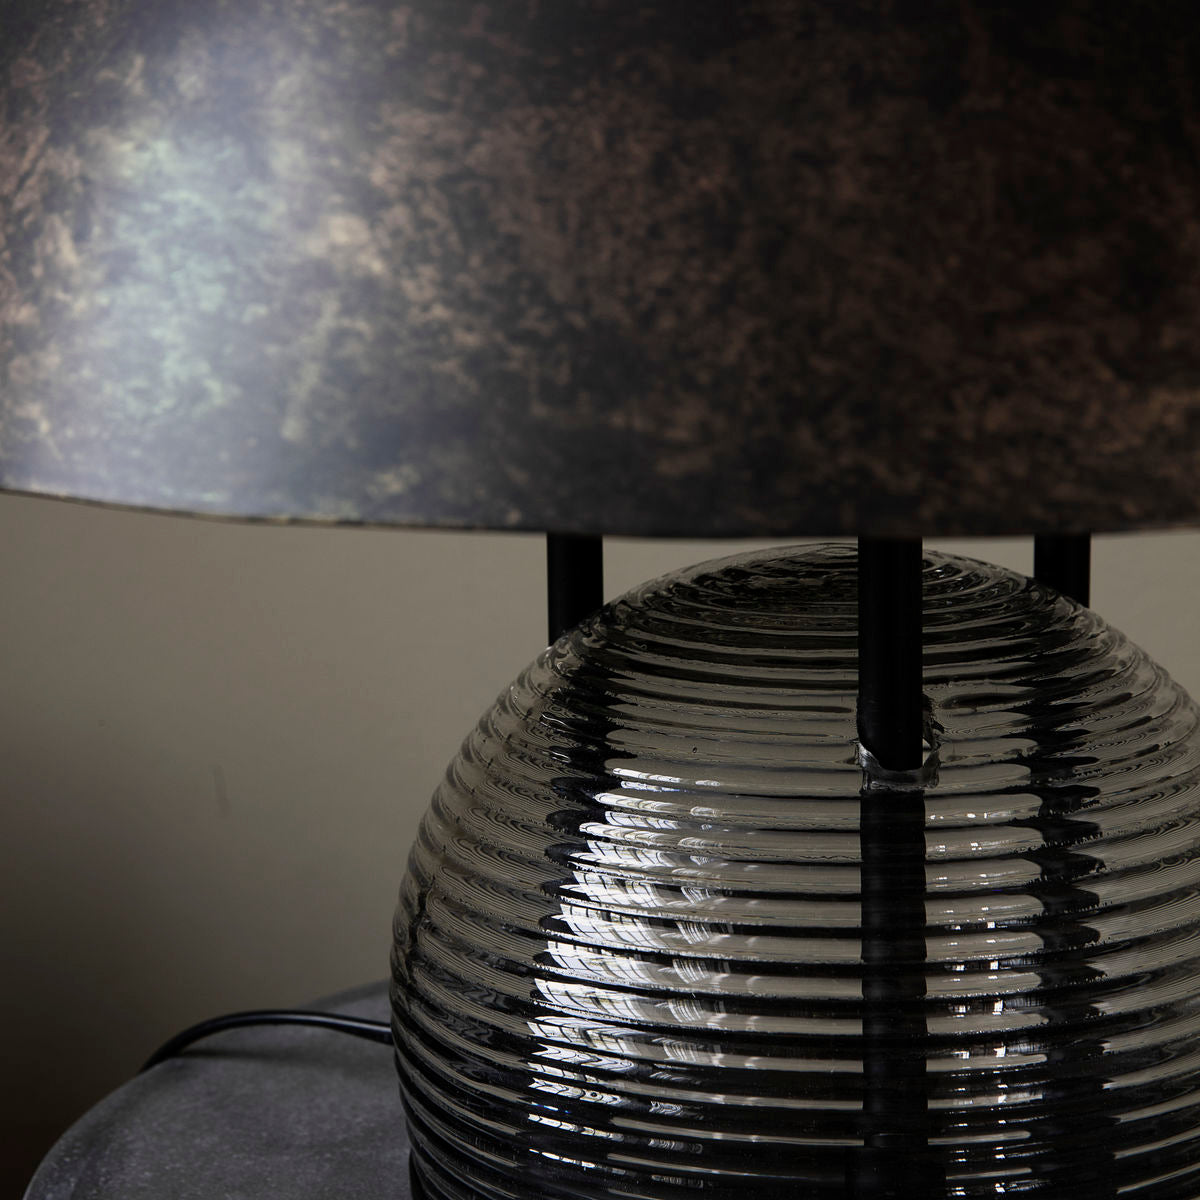 Table lamp, Umbra, Antique brown